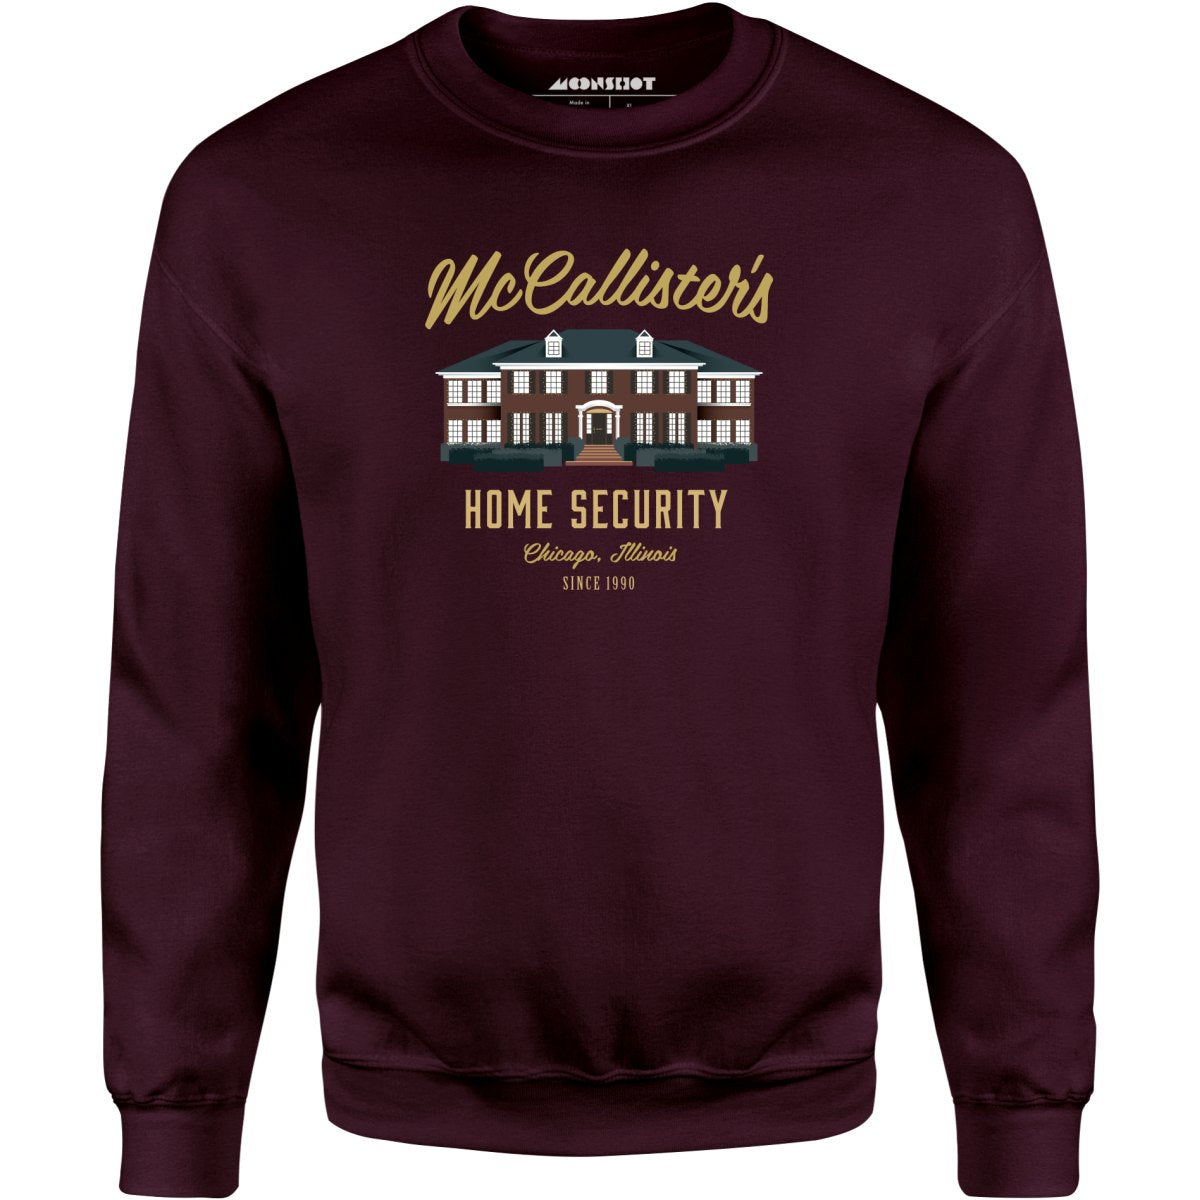 McCallister's Home Security - Unisex Sweatshirt